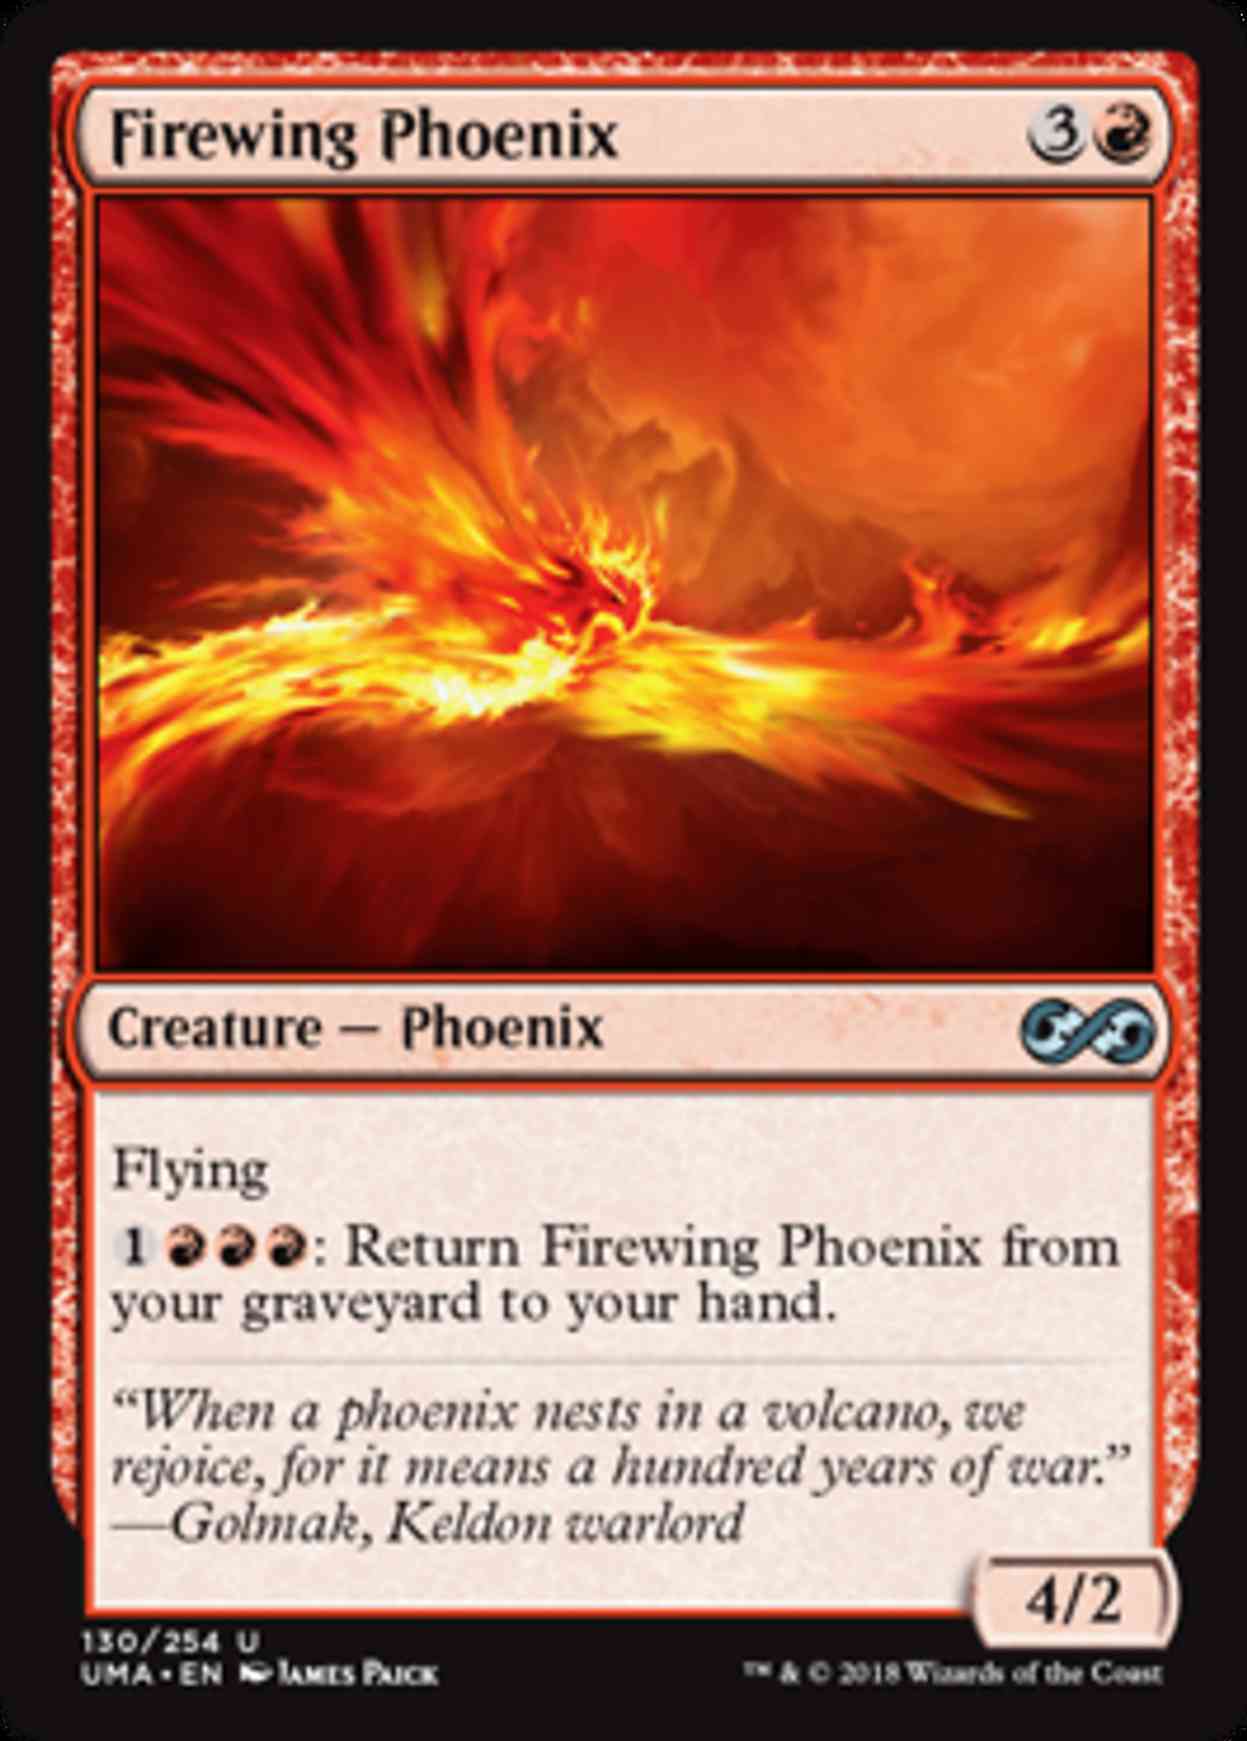 Firewing Phoenix magic card front